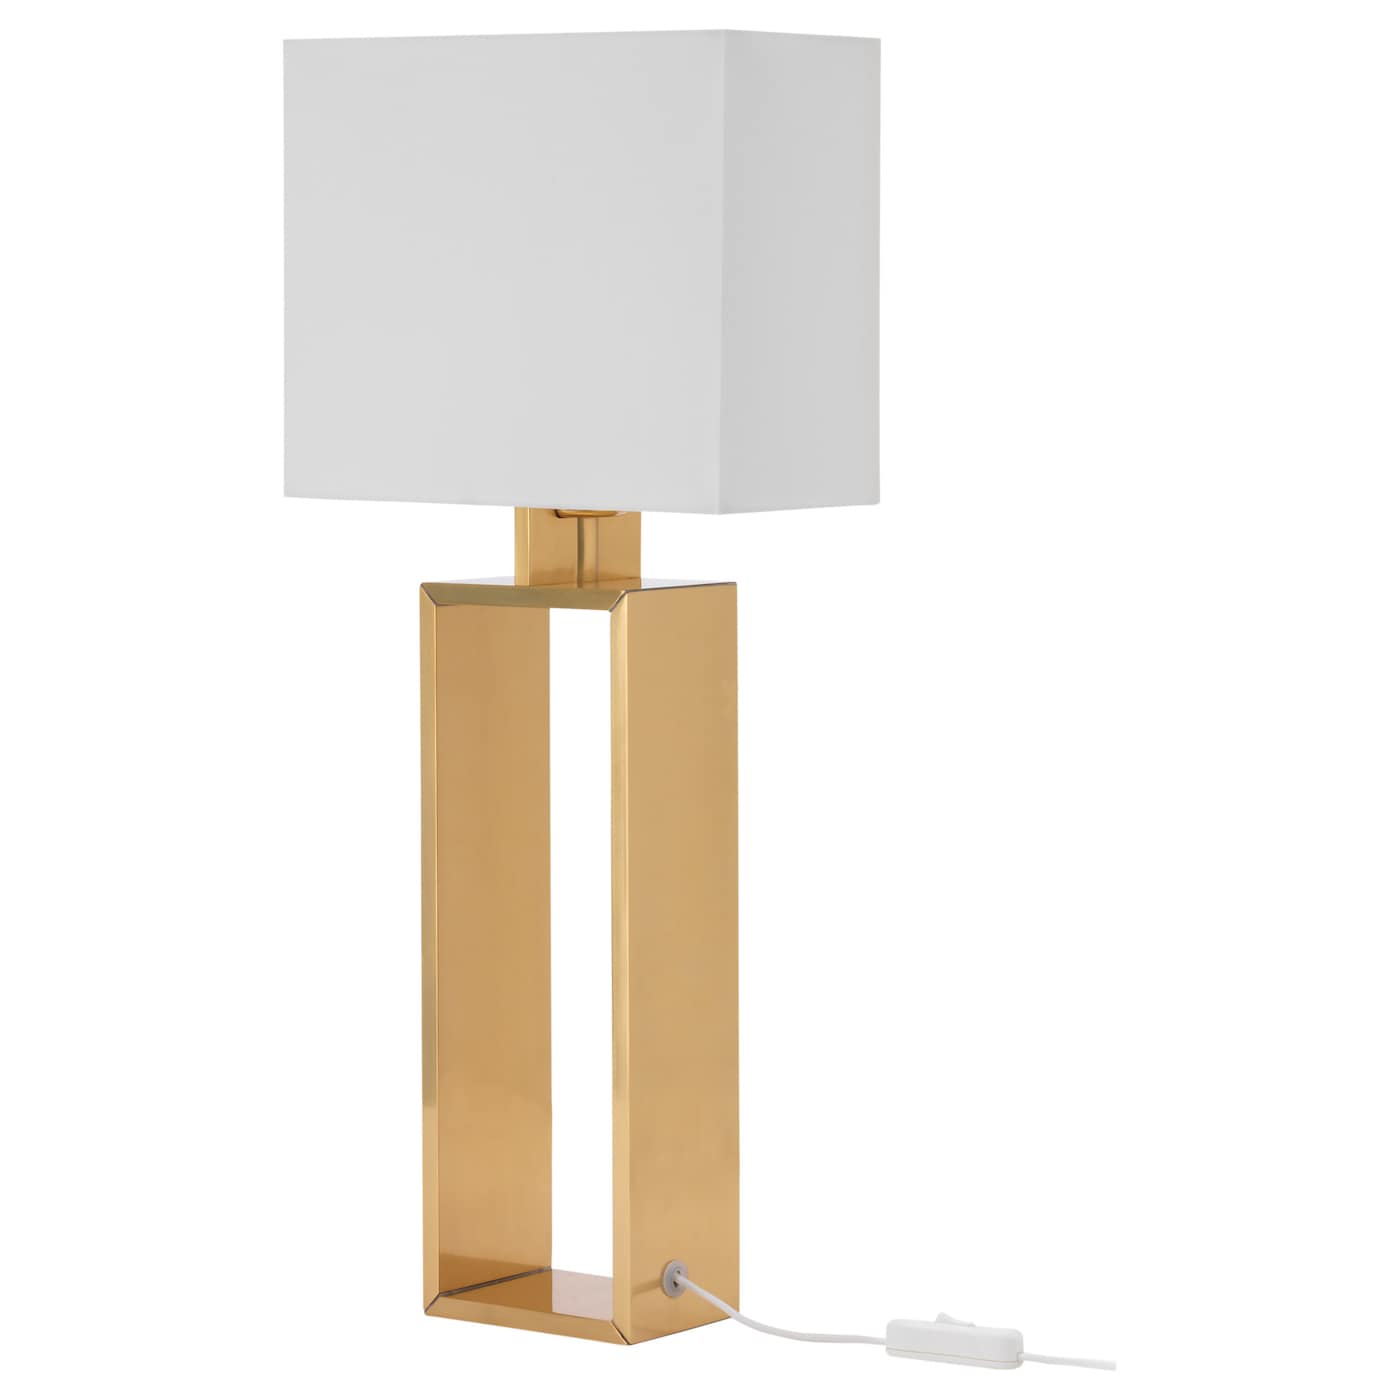 Лампа - STILTJE  IKEA/СТИЛТЬЕ ИКЕА, 59 см, желтый/белый